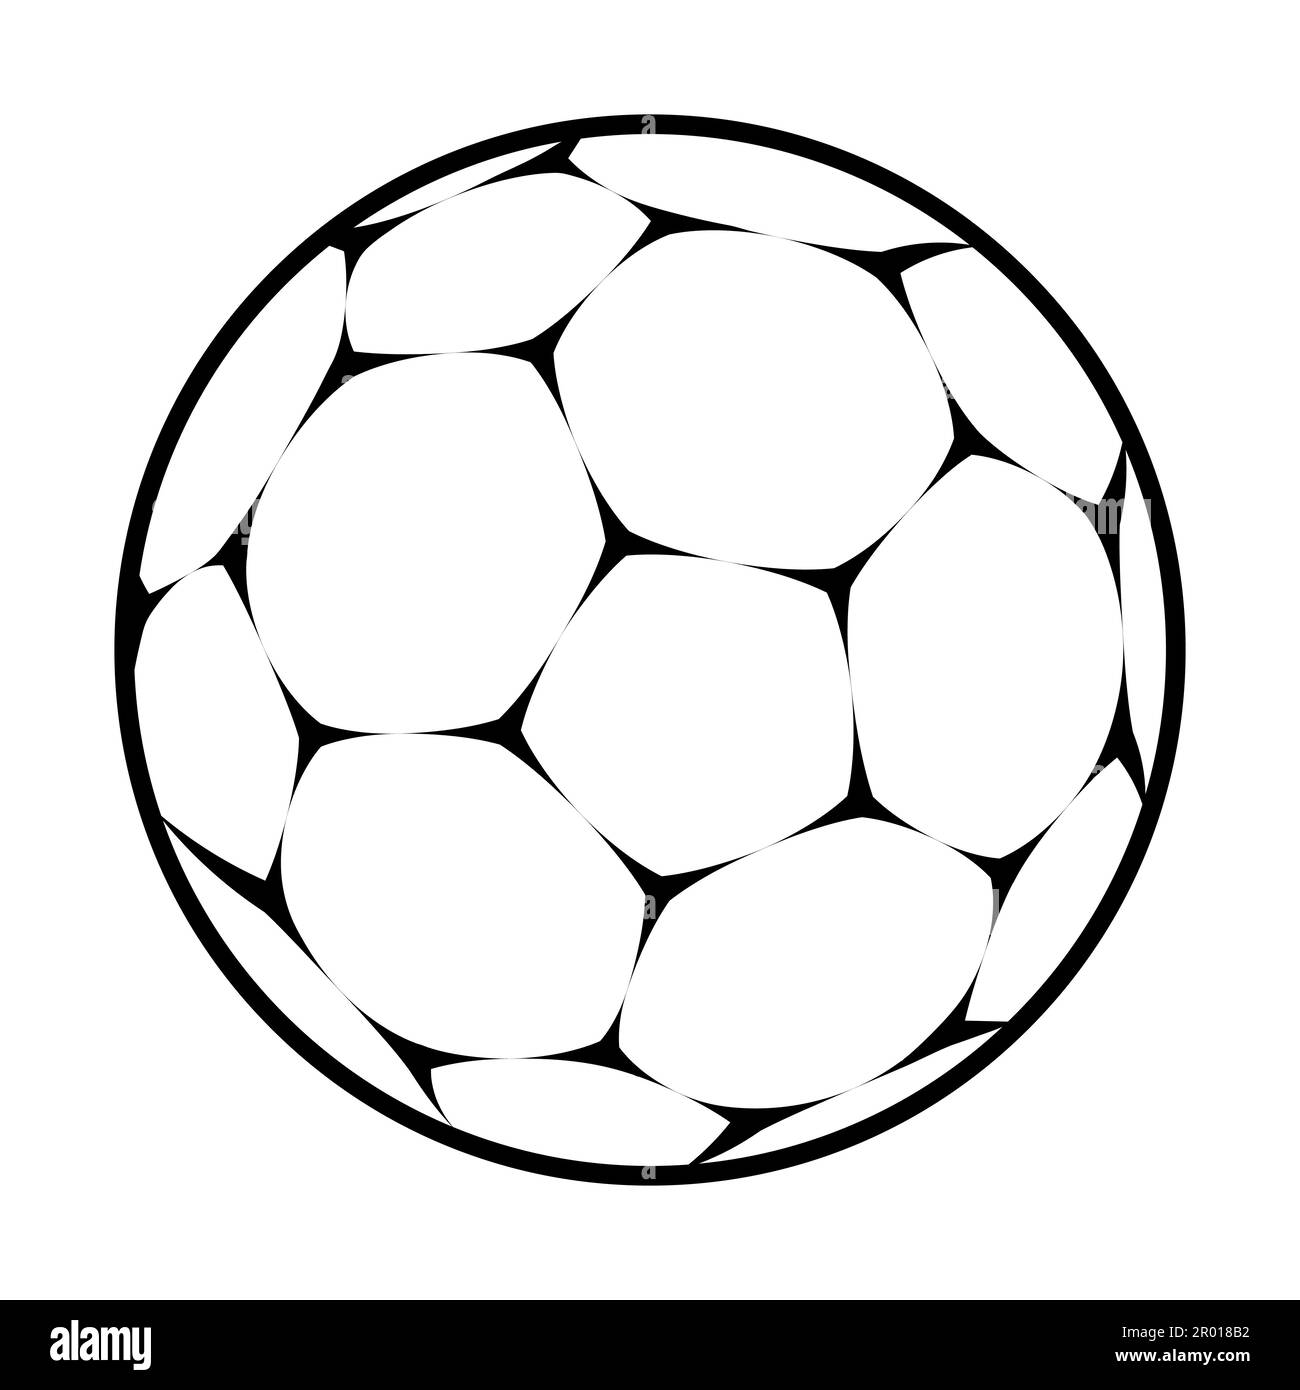 Soccer ball or football flat vector icon simple black style, illustration. Stock Vector